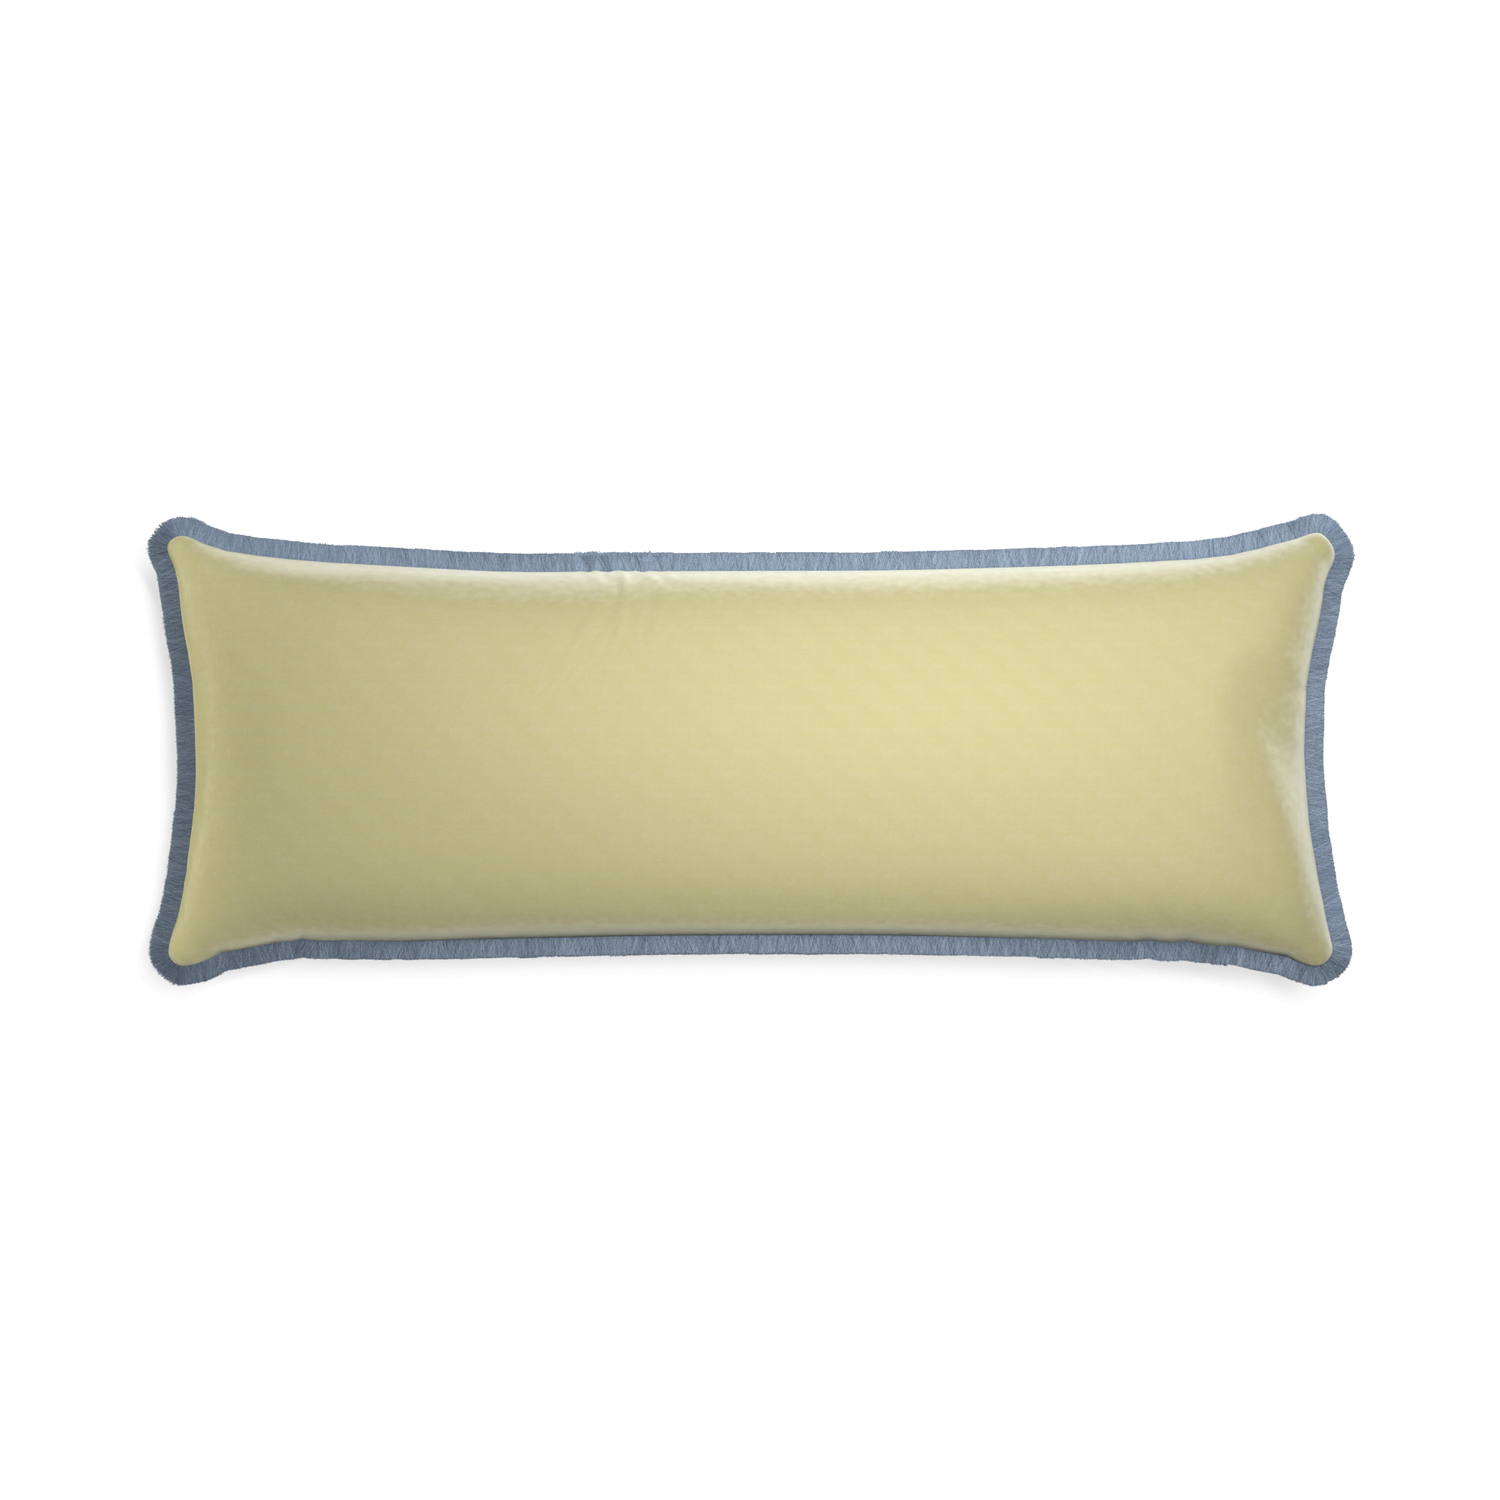 rectangle light green pillow with sky blue fringe